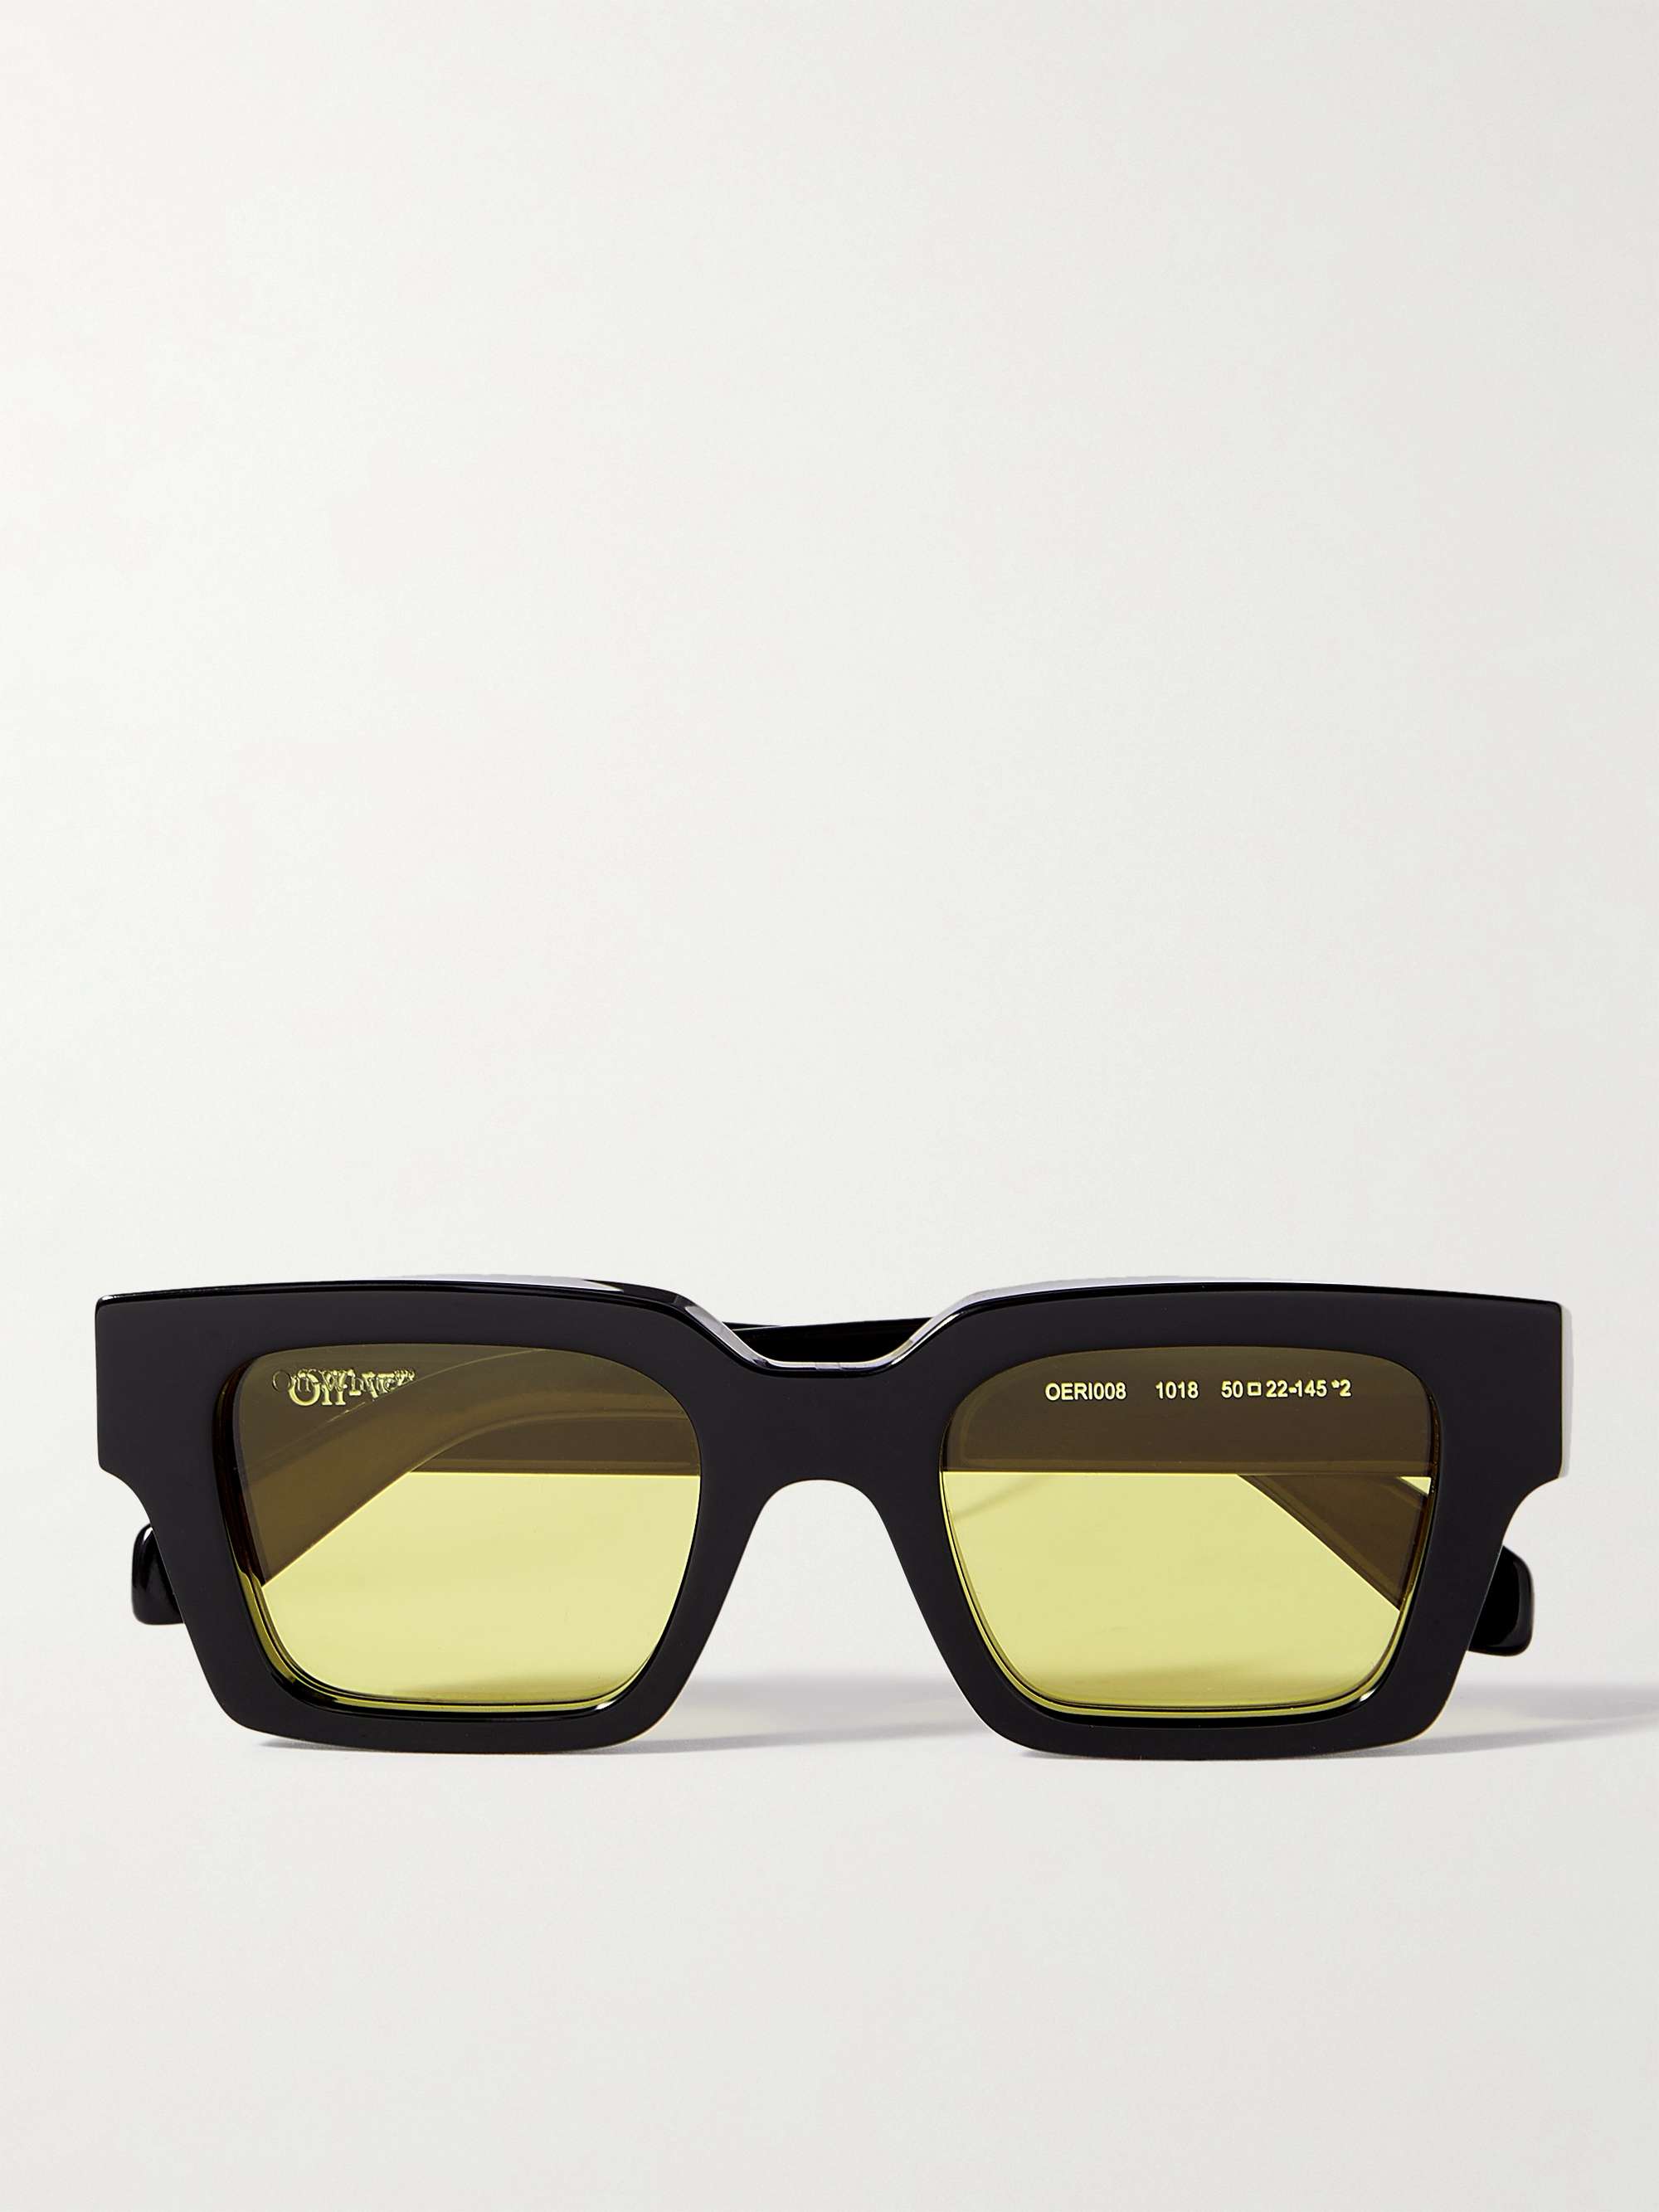 Off-White c/o Virgil Abloh Virgil Acetate Square Sunglasses in